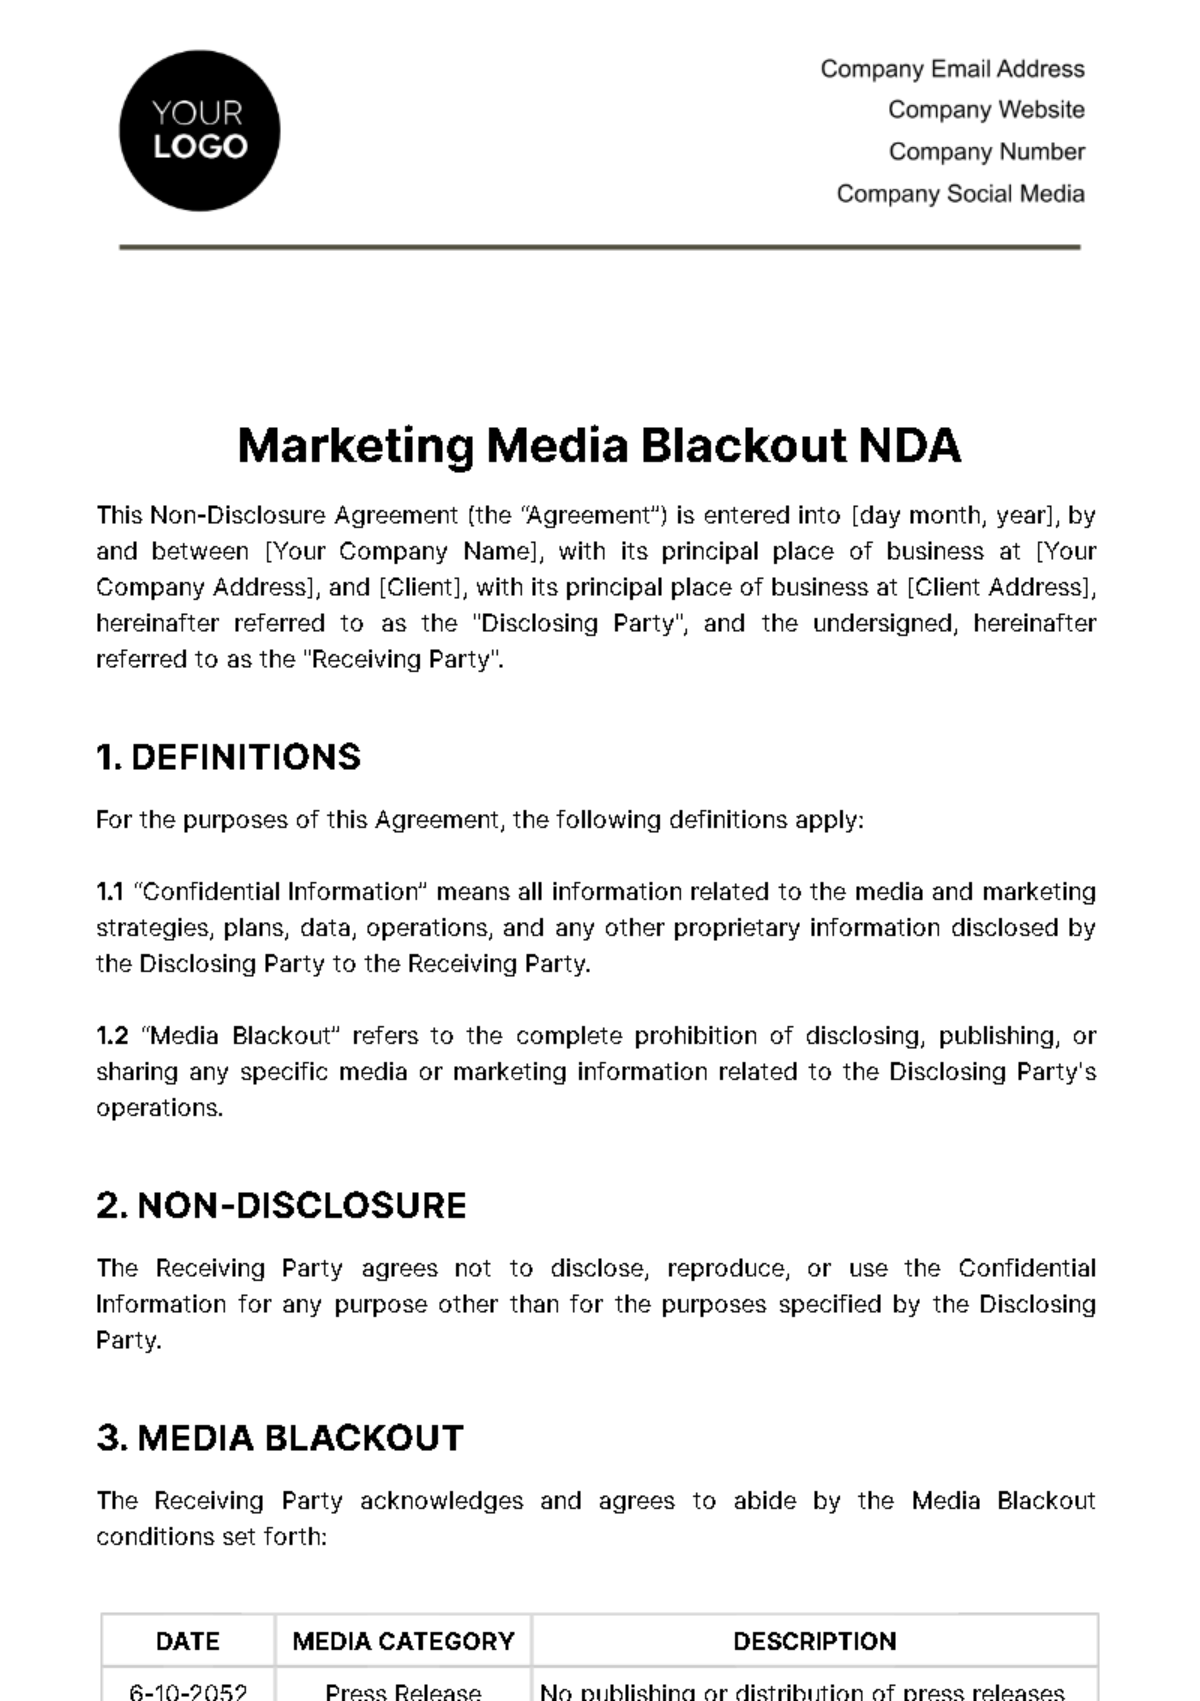 Free Marketing Media Blackout NDA Template